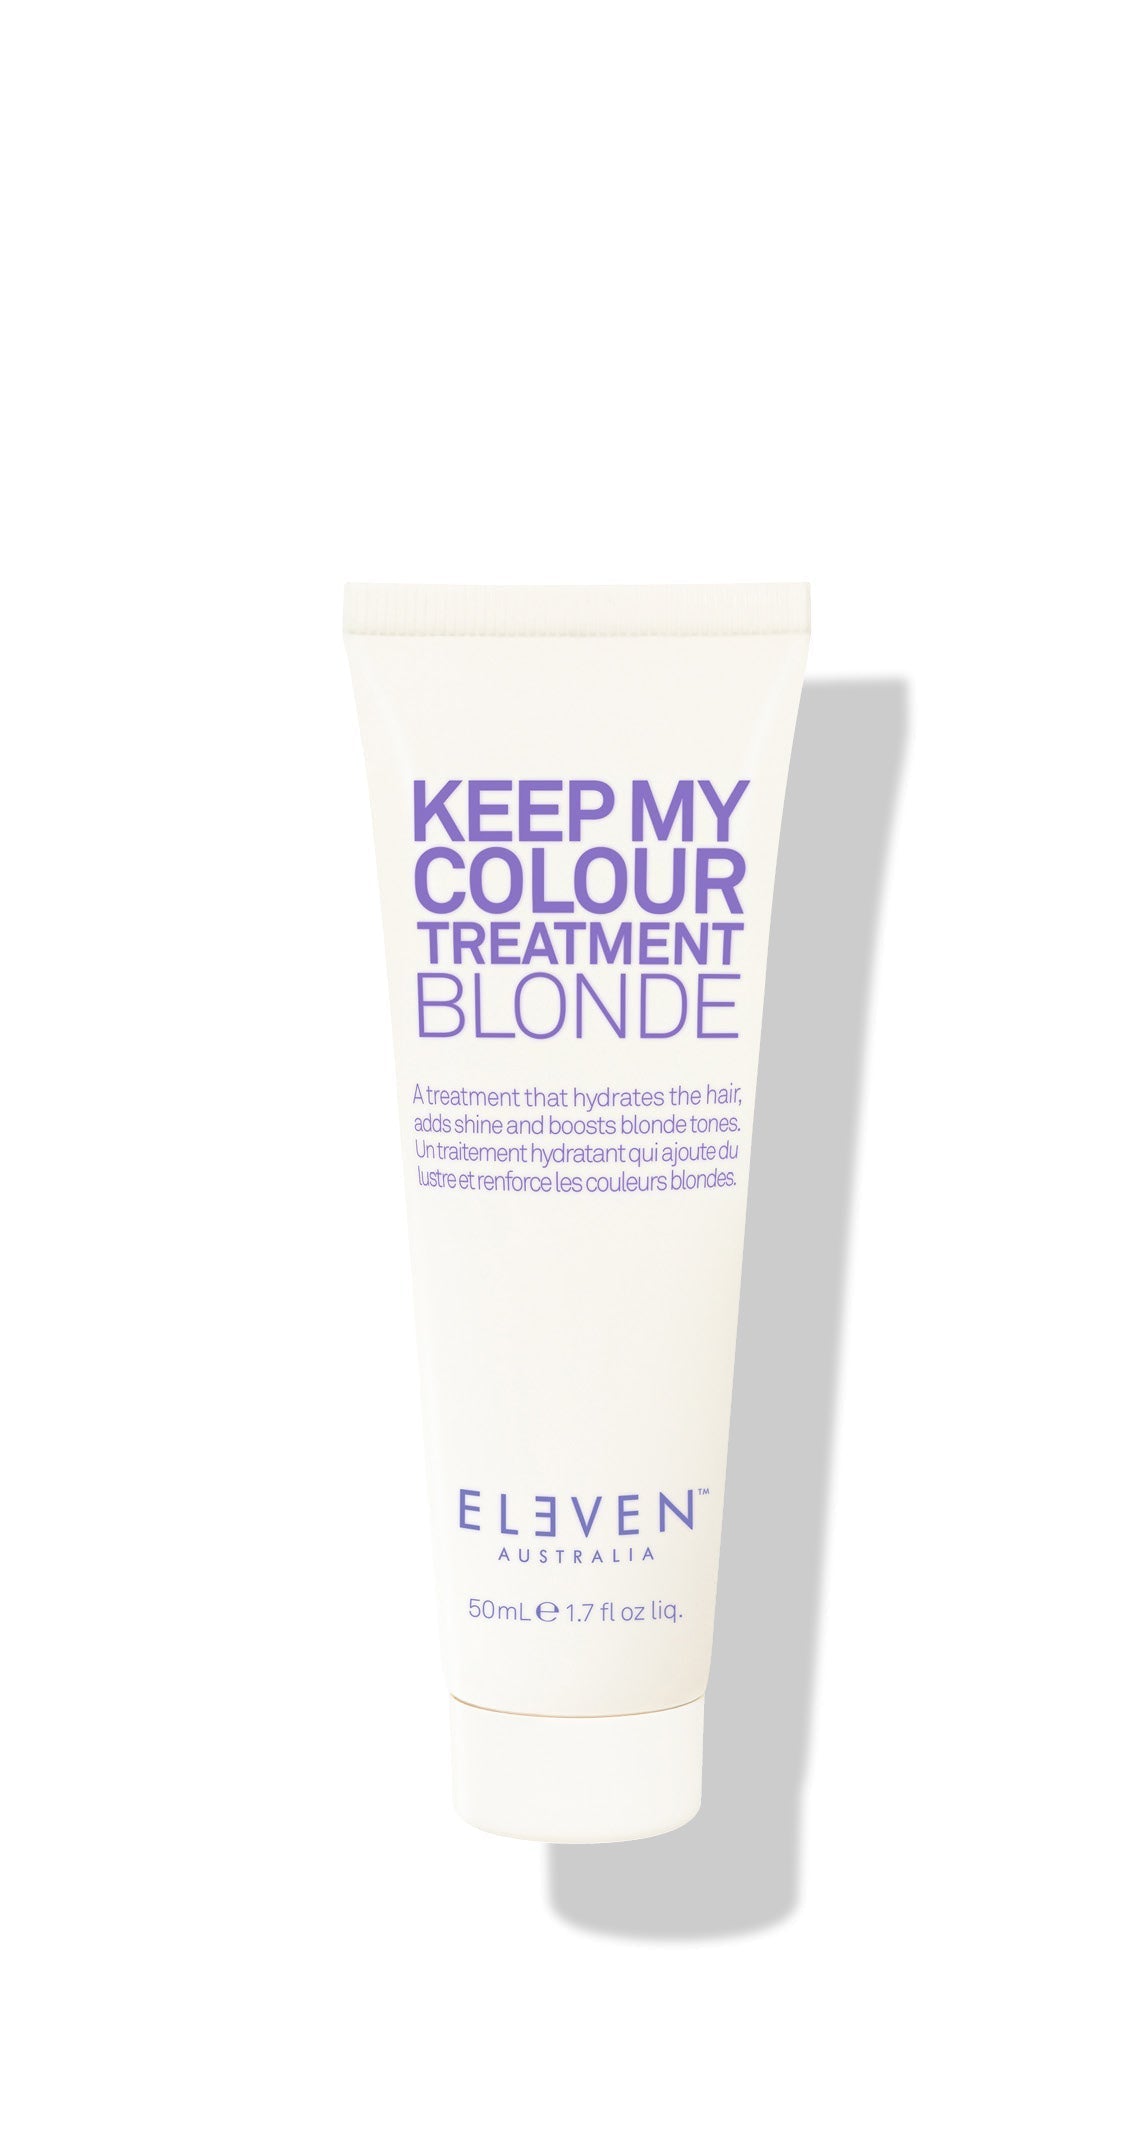 Keep My Colour Treatment Blonde - 50ml - ELEVEN Australia